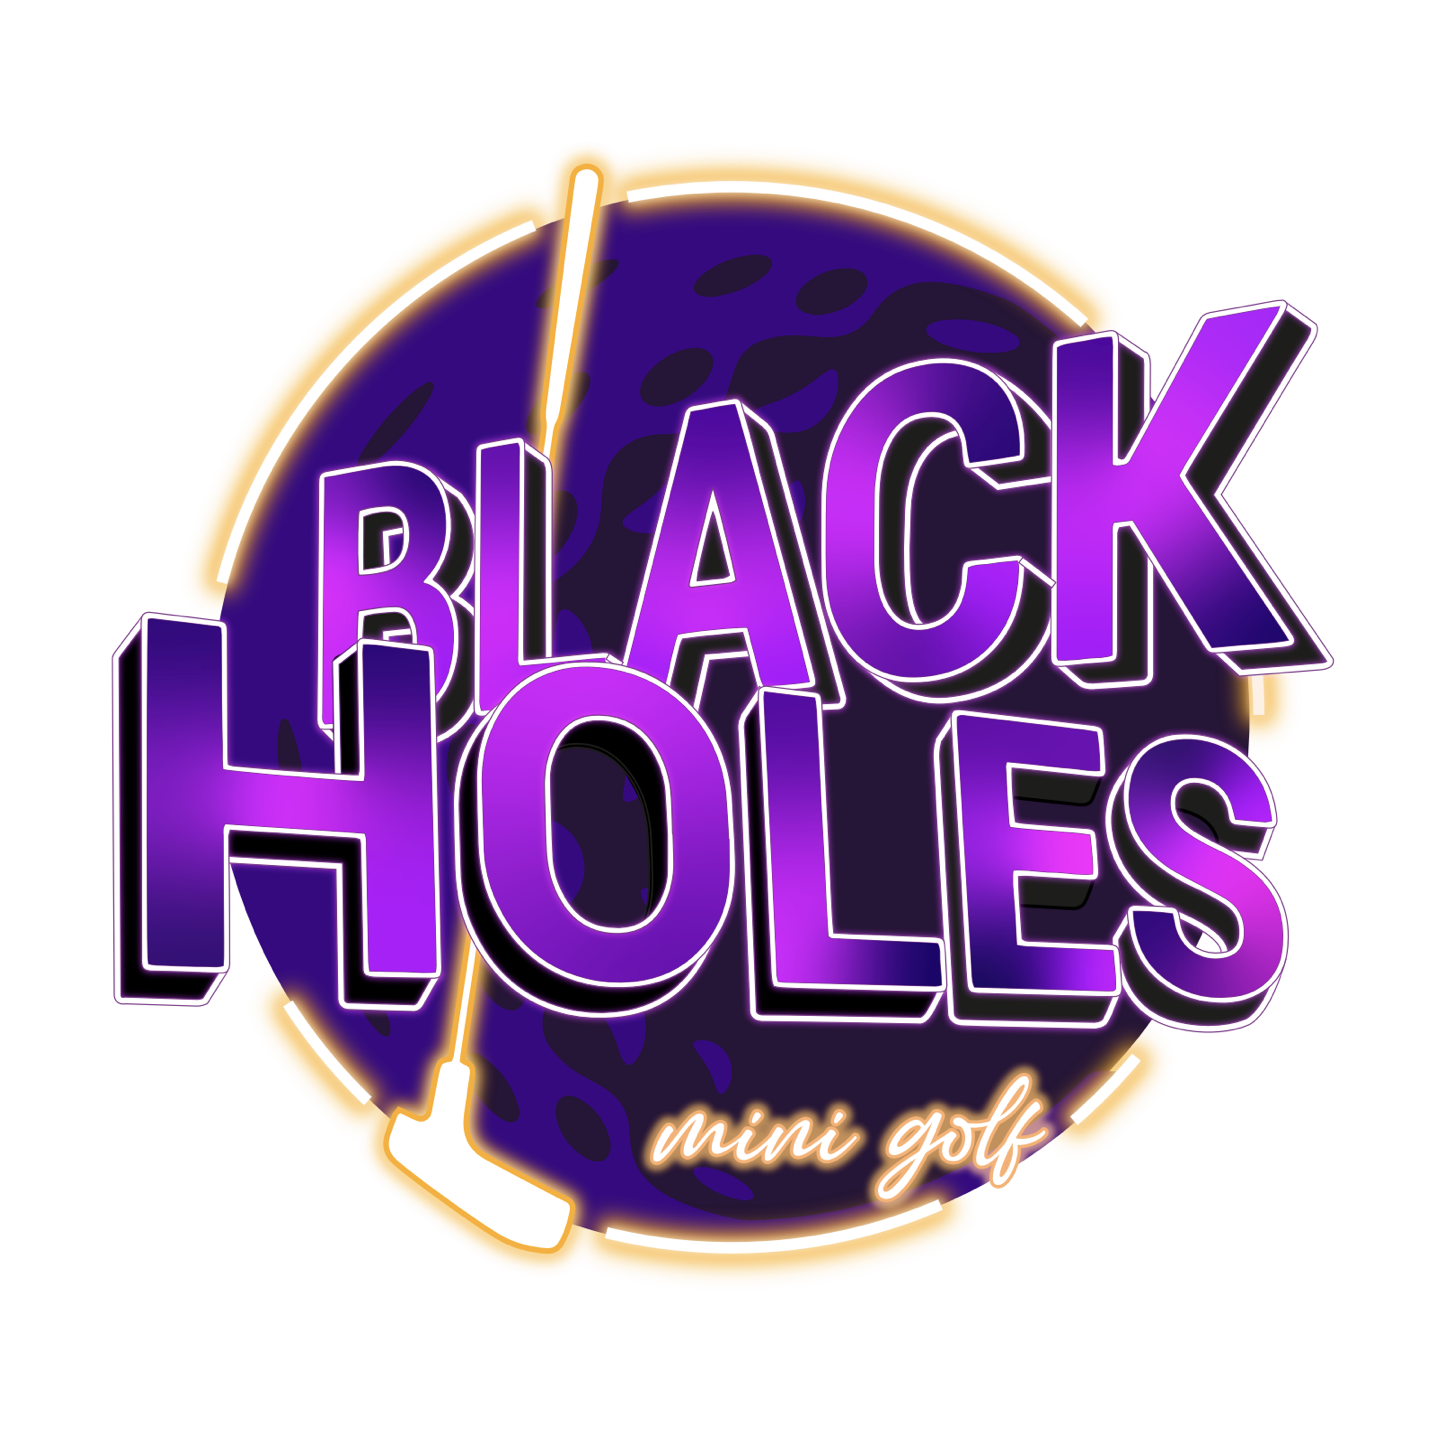 Black Holes Minigolf